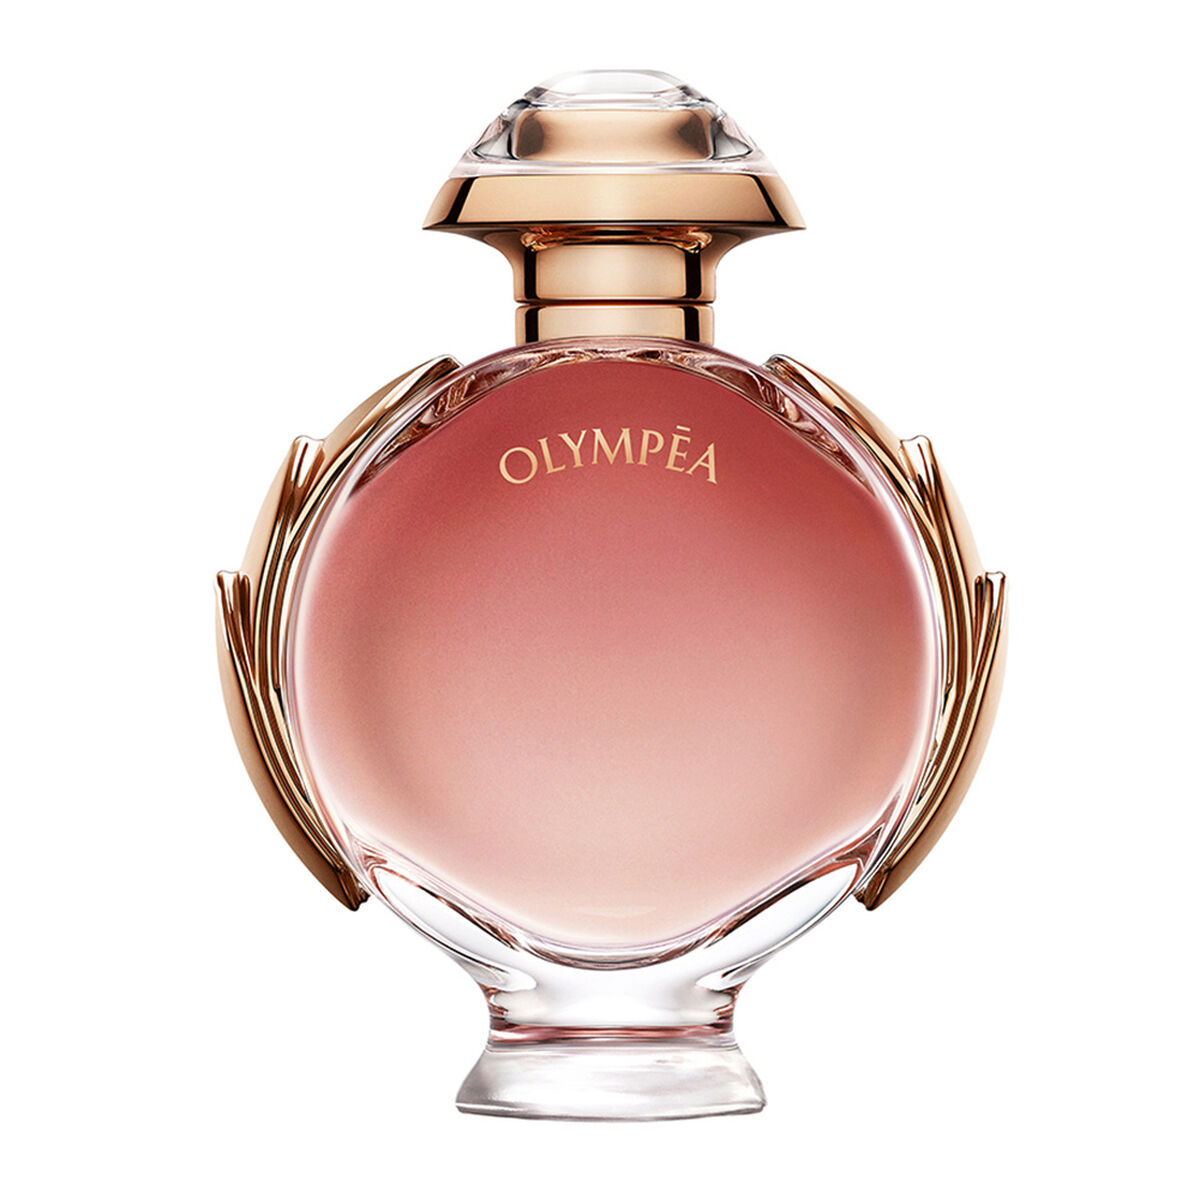 Perfume Paco Rabanne Olympéa Legend EDP 50 ml